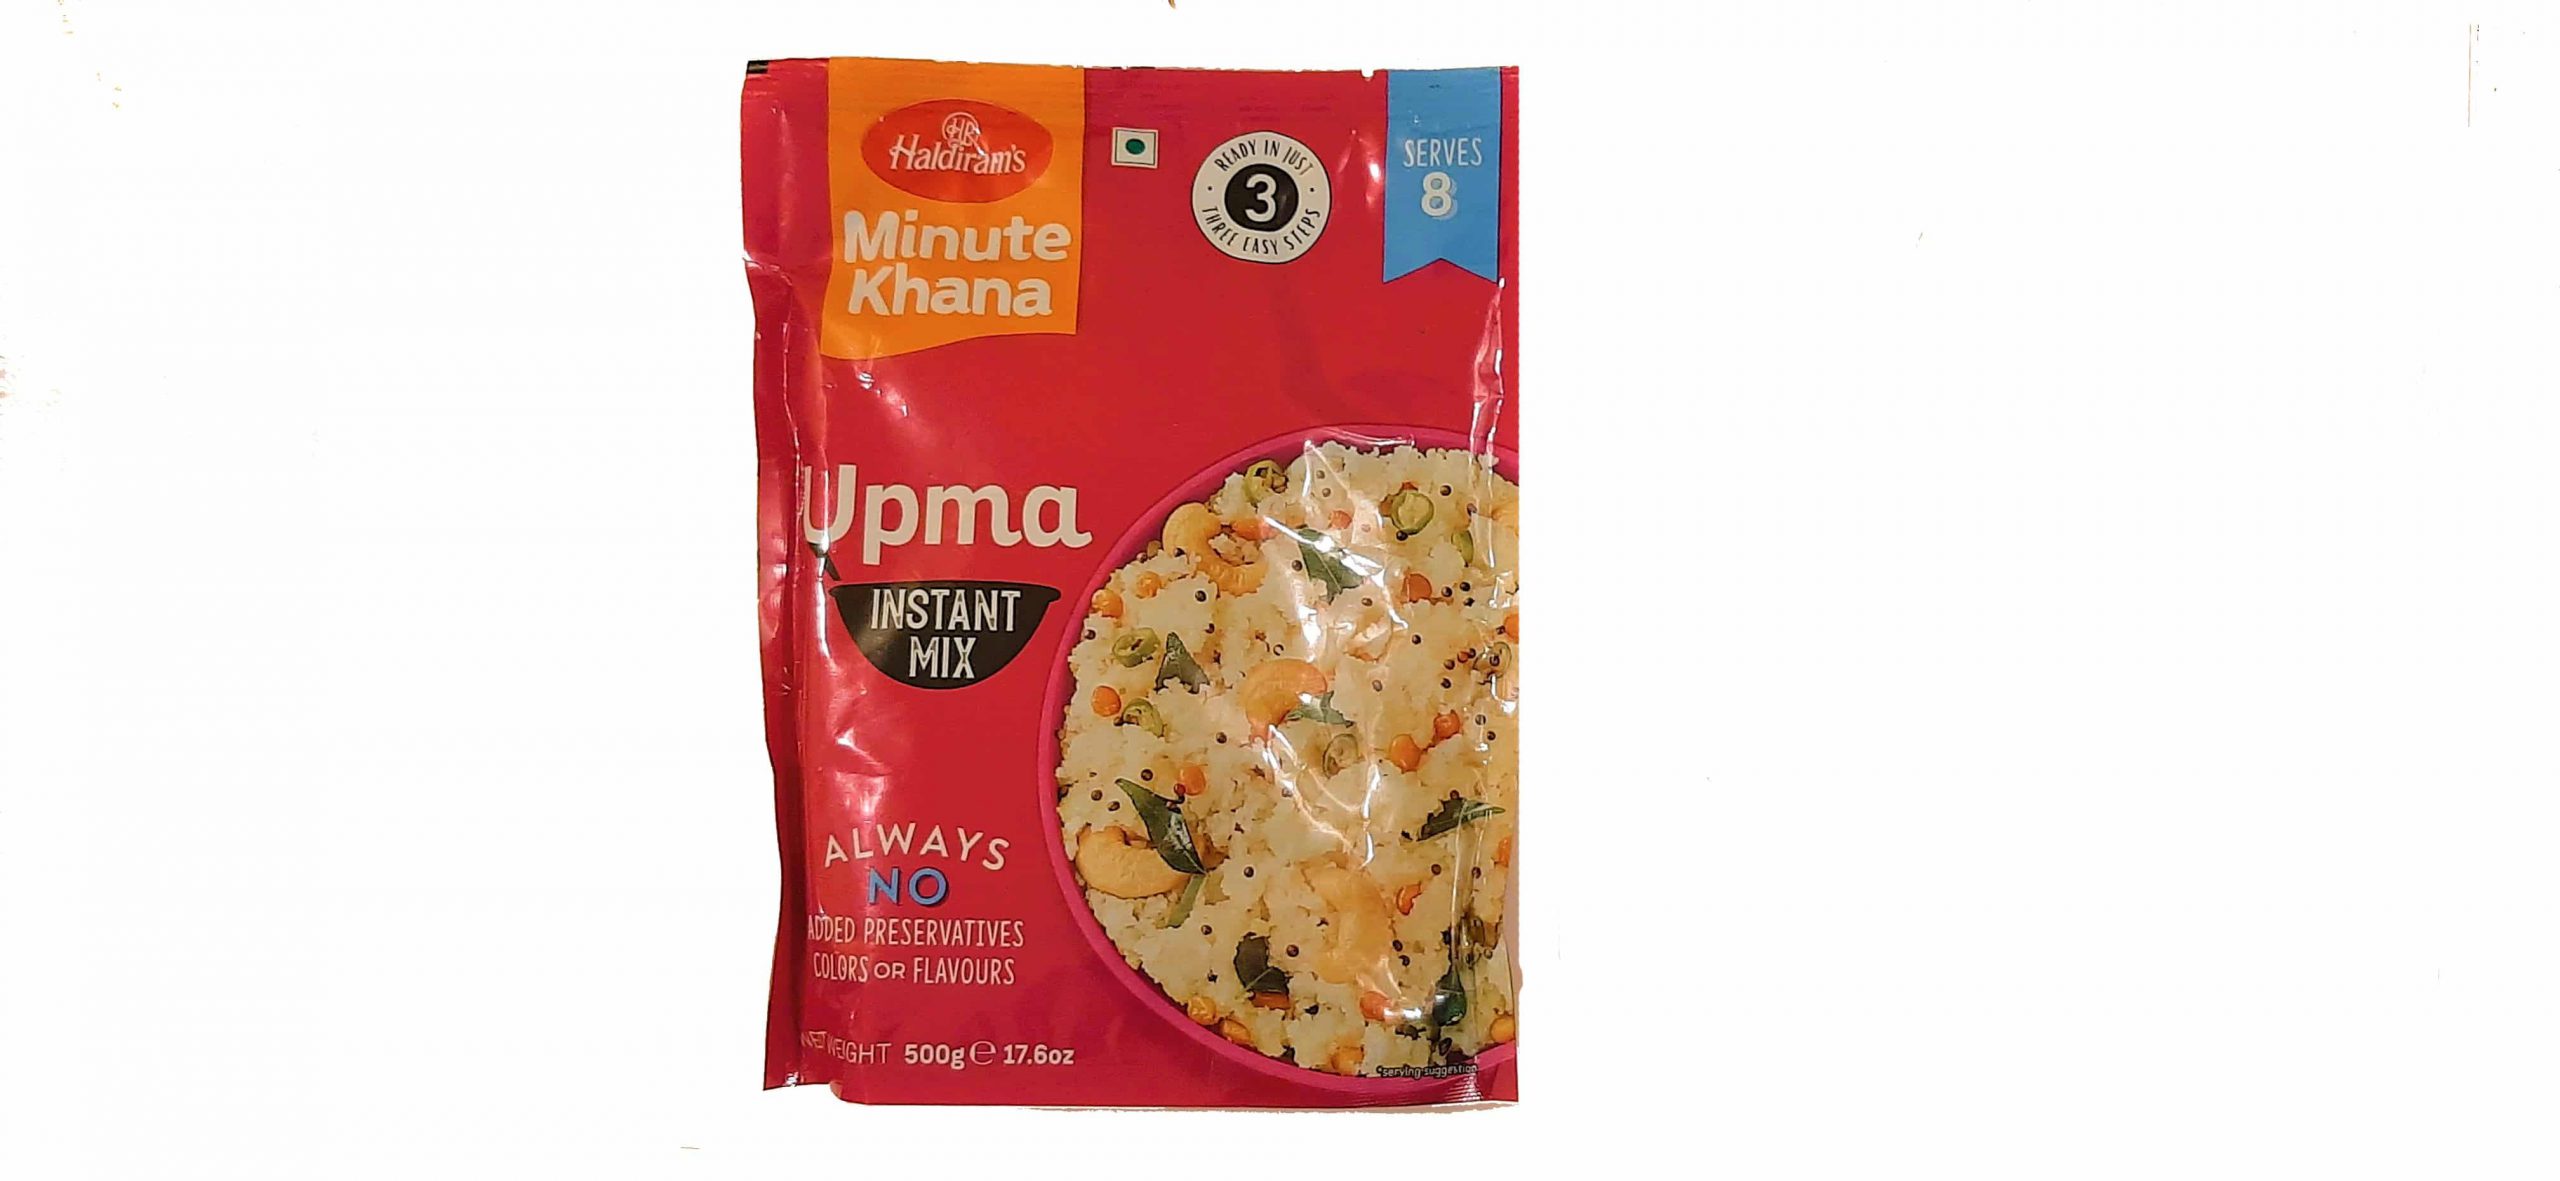 haldiram minute khana- instant upma mix